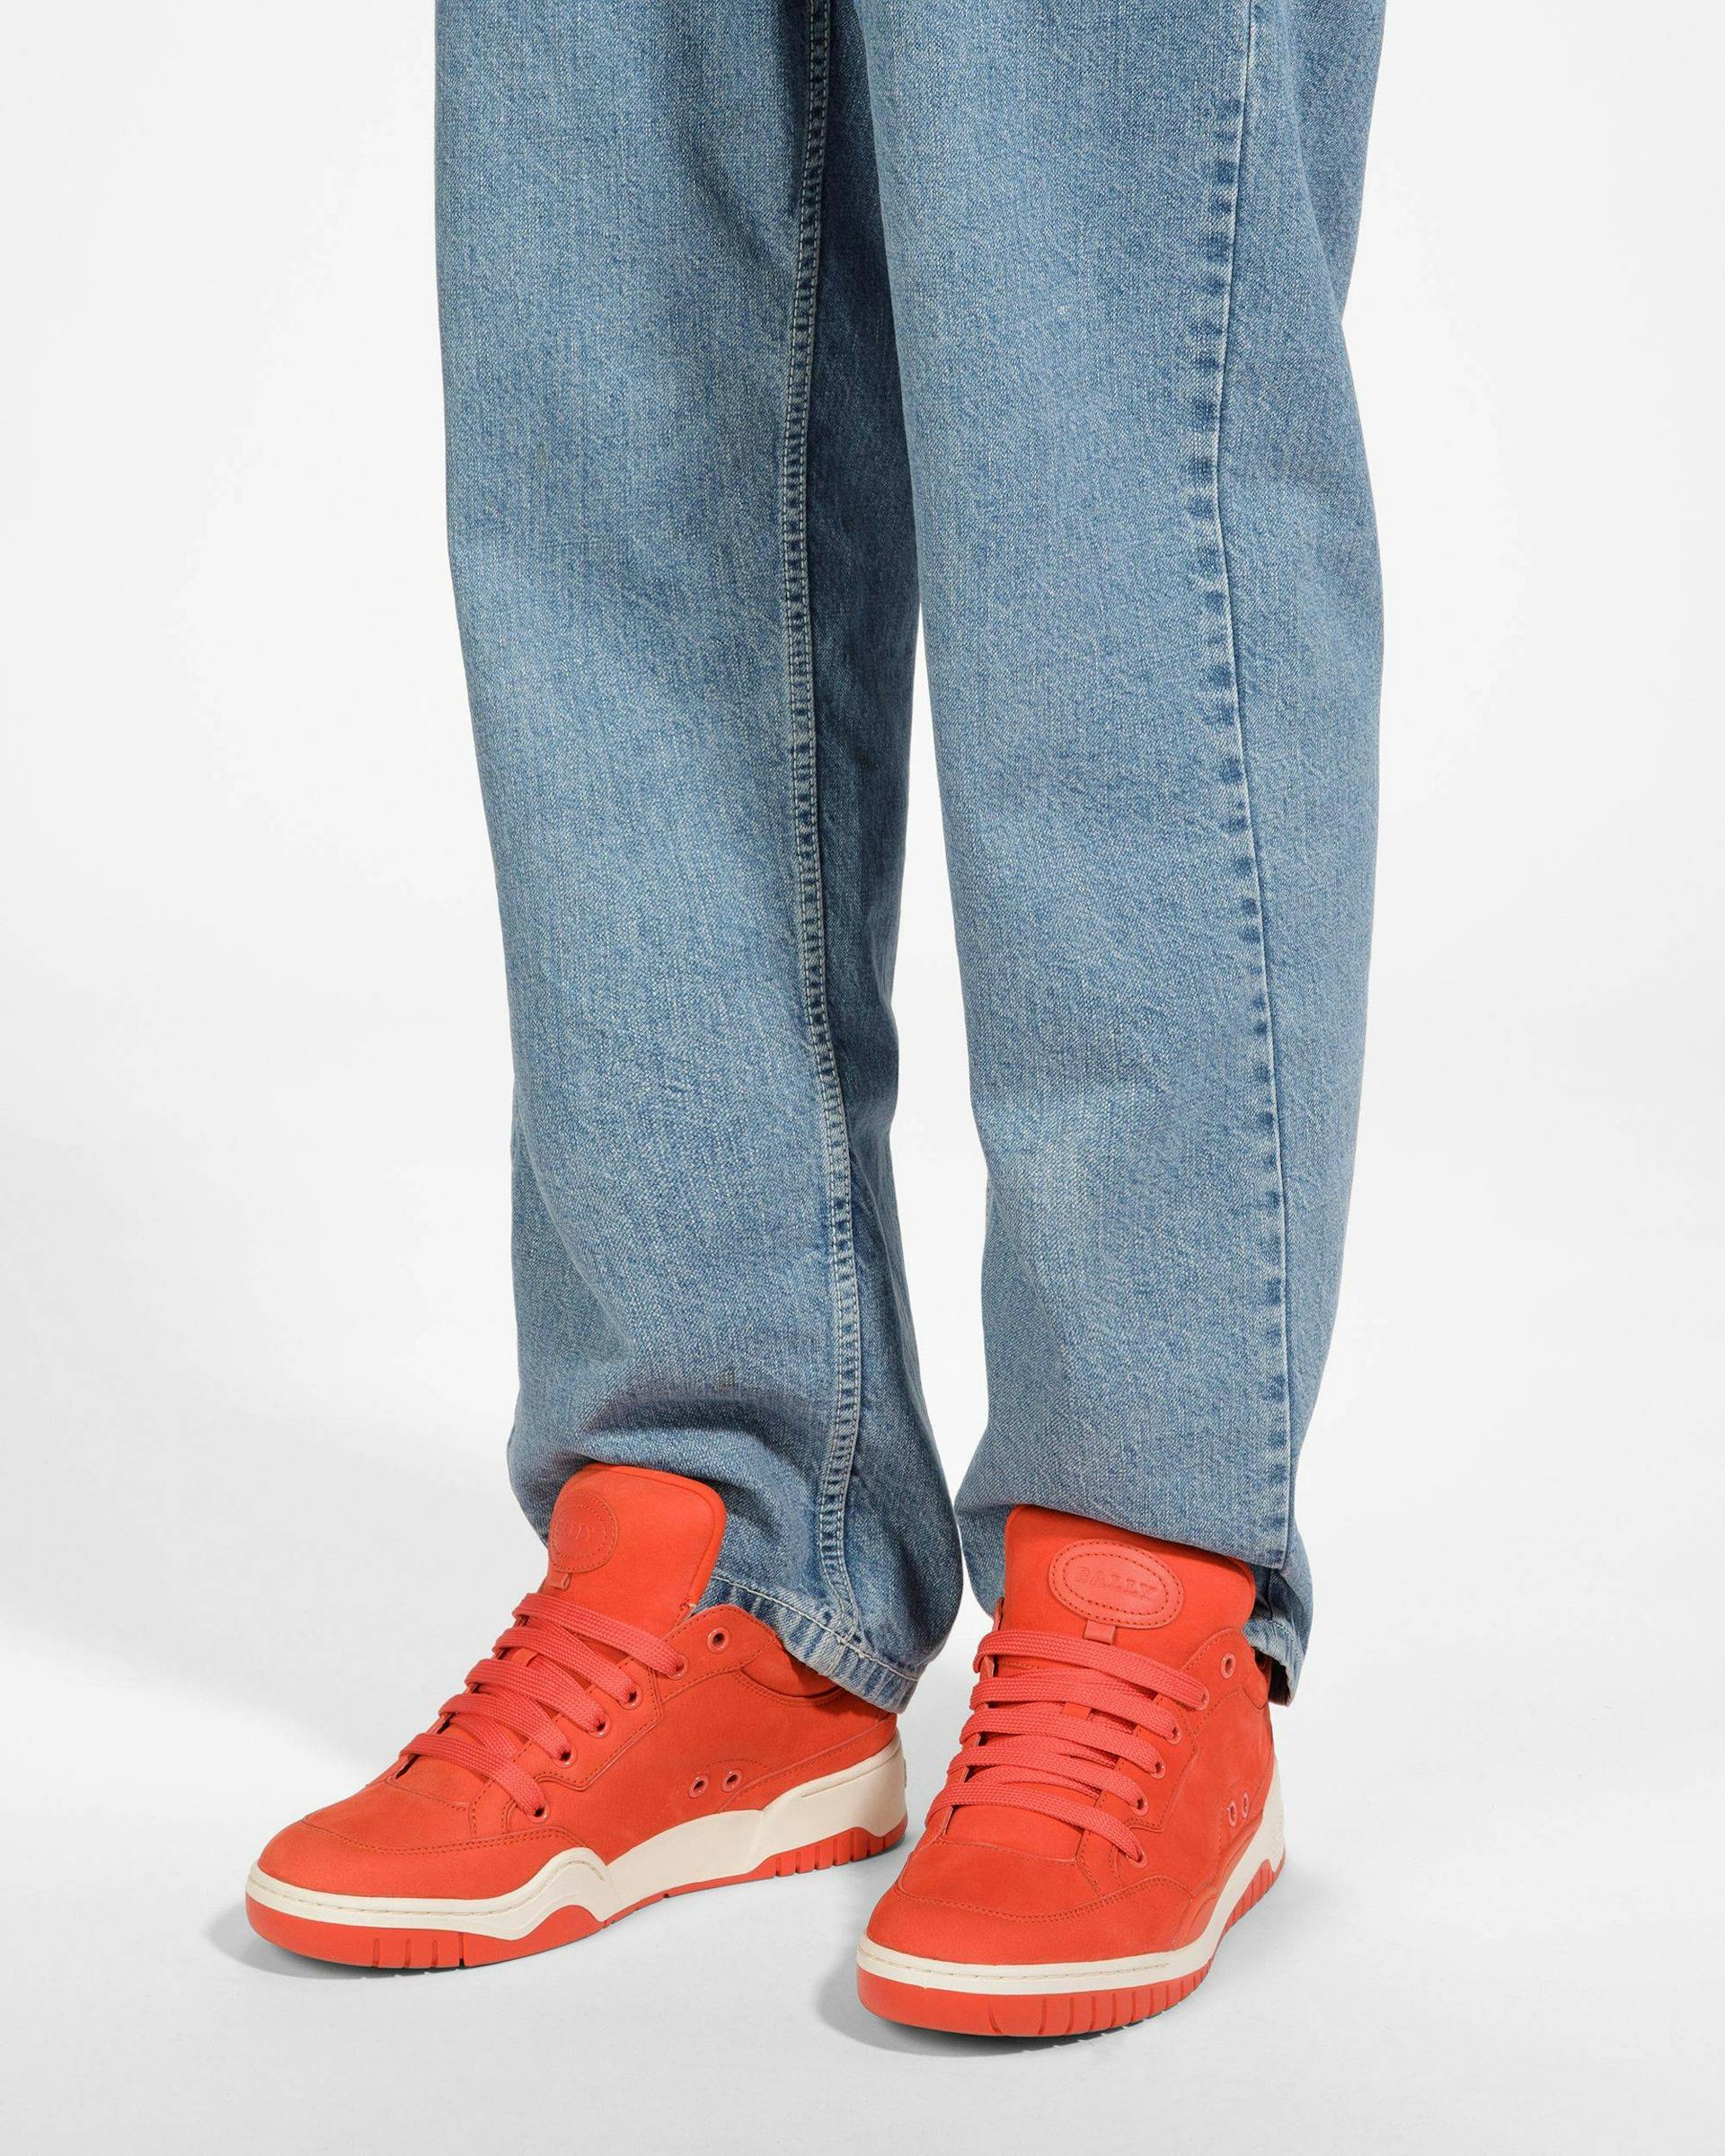 Kiro Leather Sneakers In Orange - Men's - Bally - 07